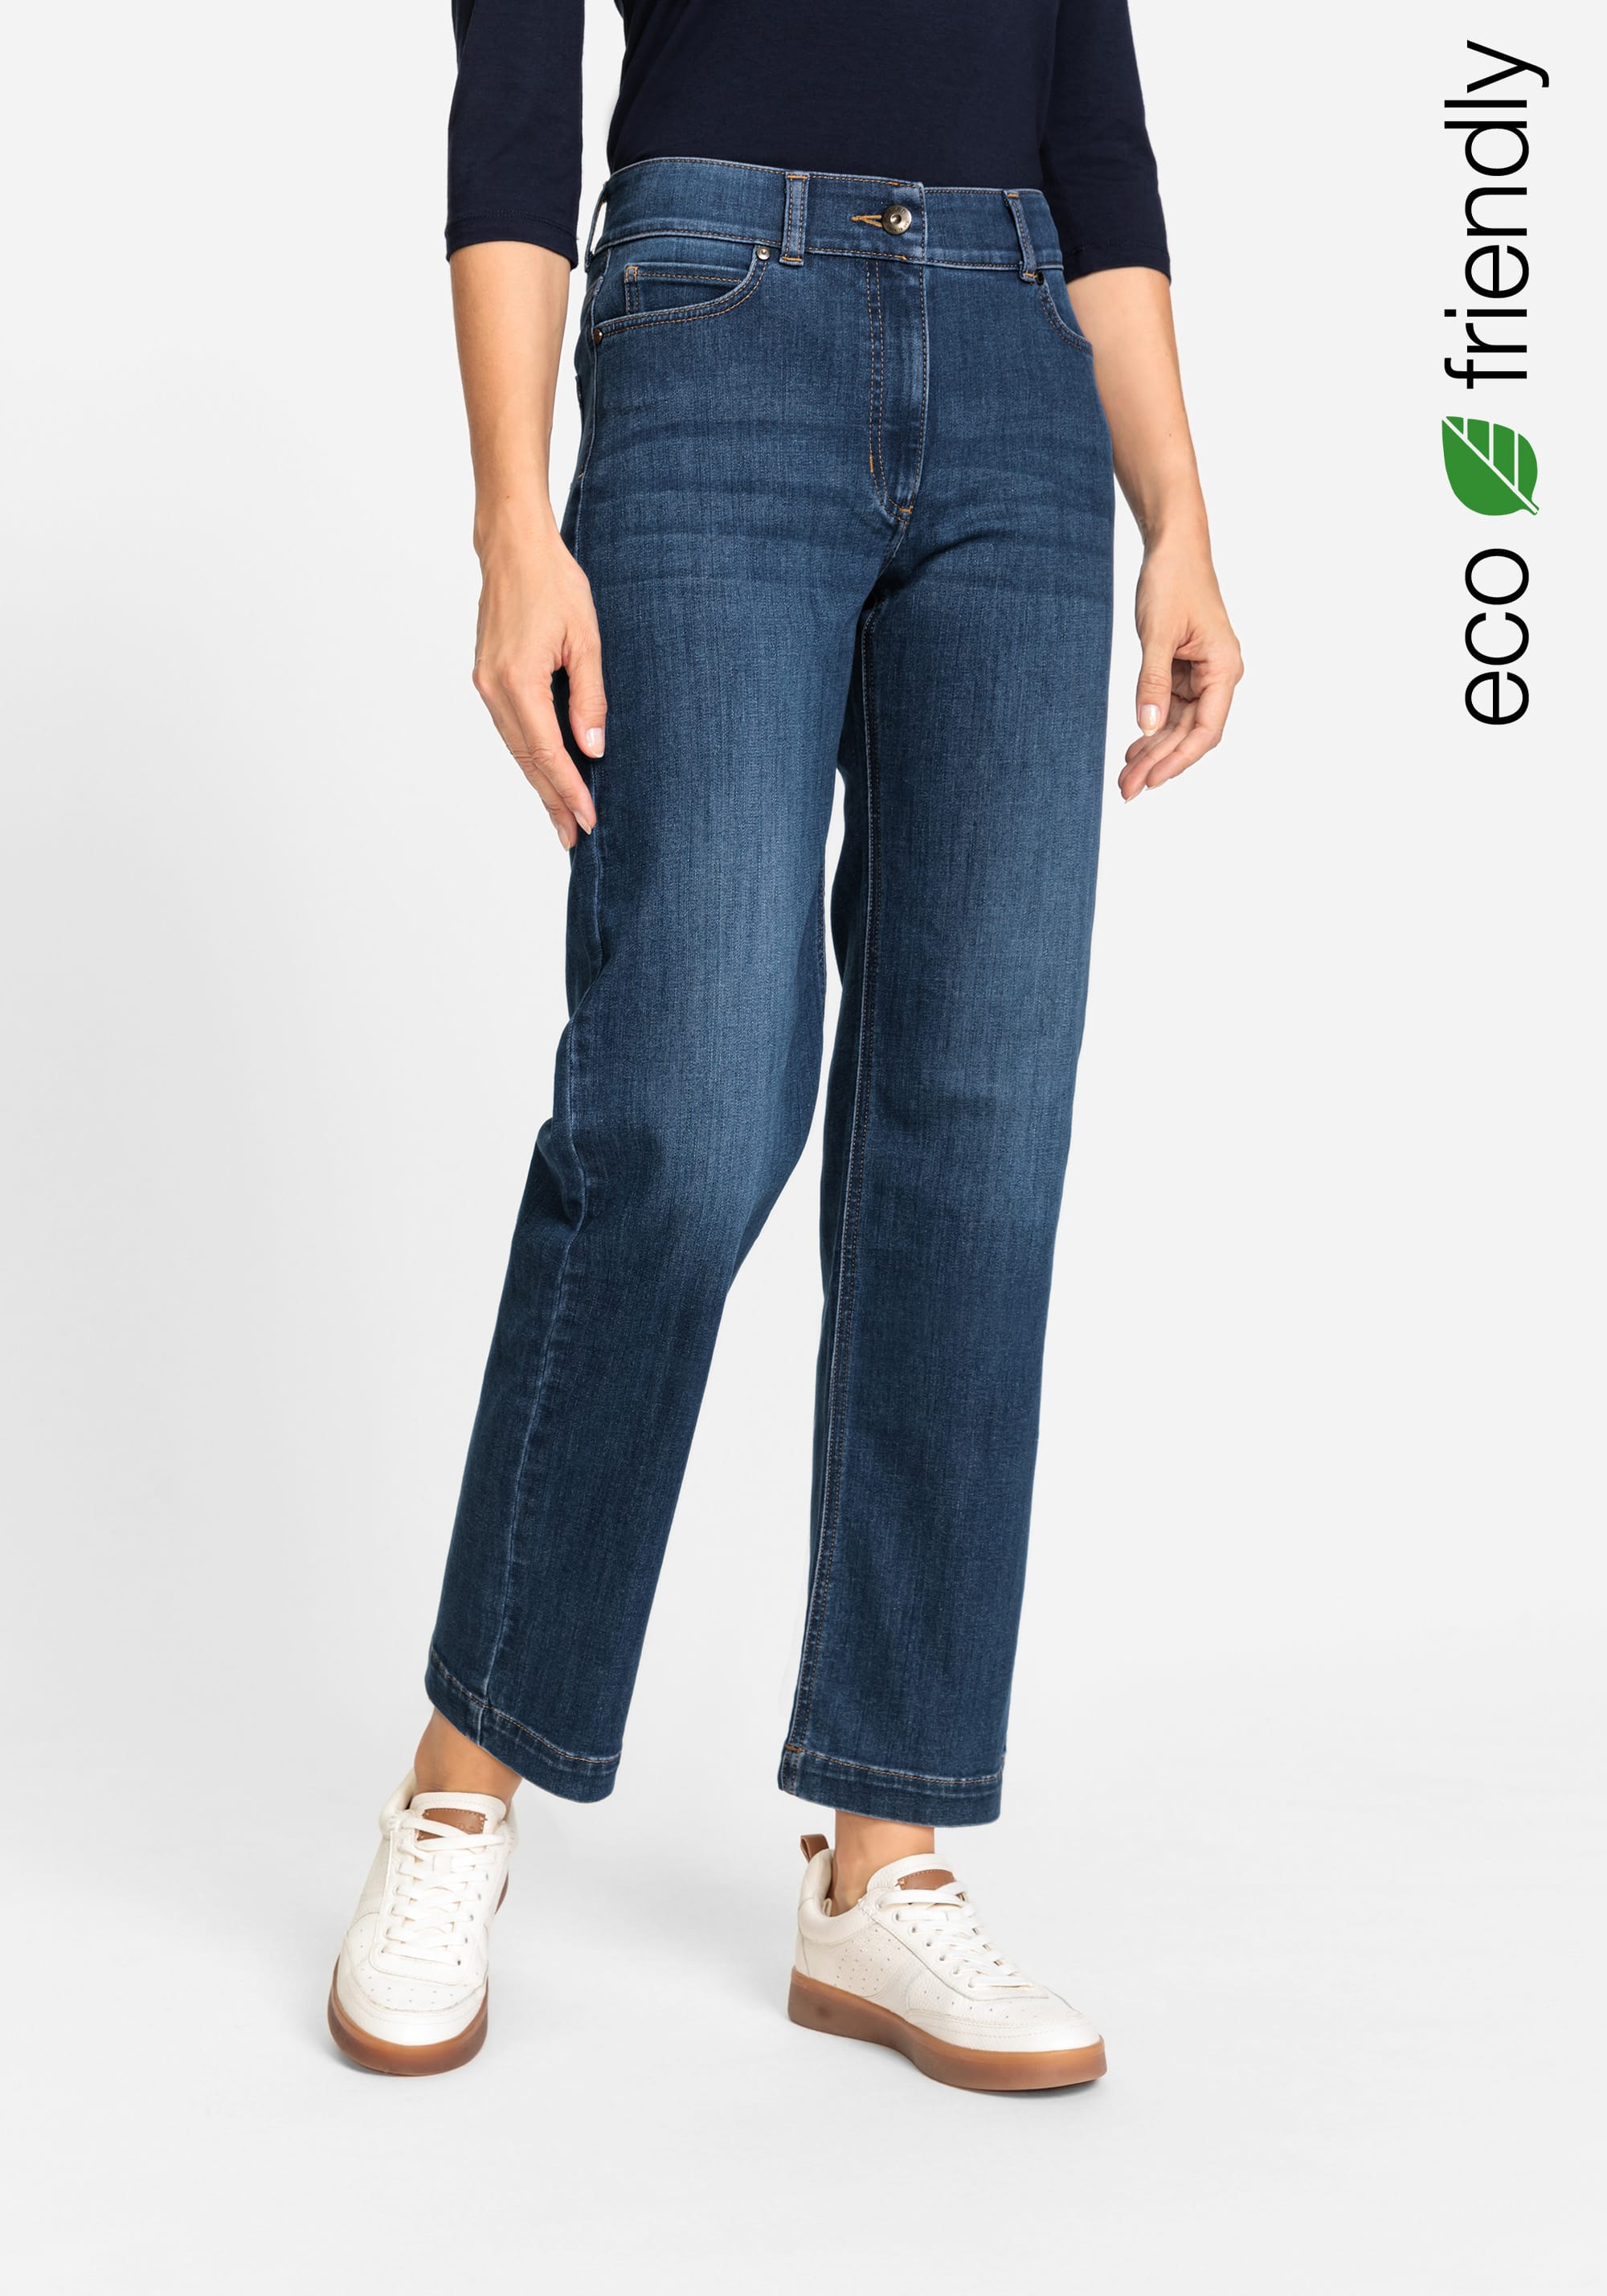 Mona Fit Straight Leg 5-Pocket Jean containing REPREVE® - Olsen Fashion  Canada